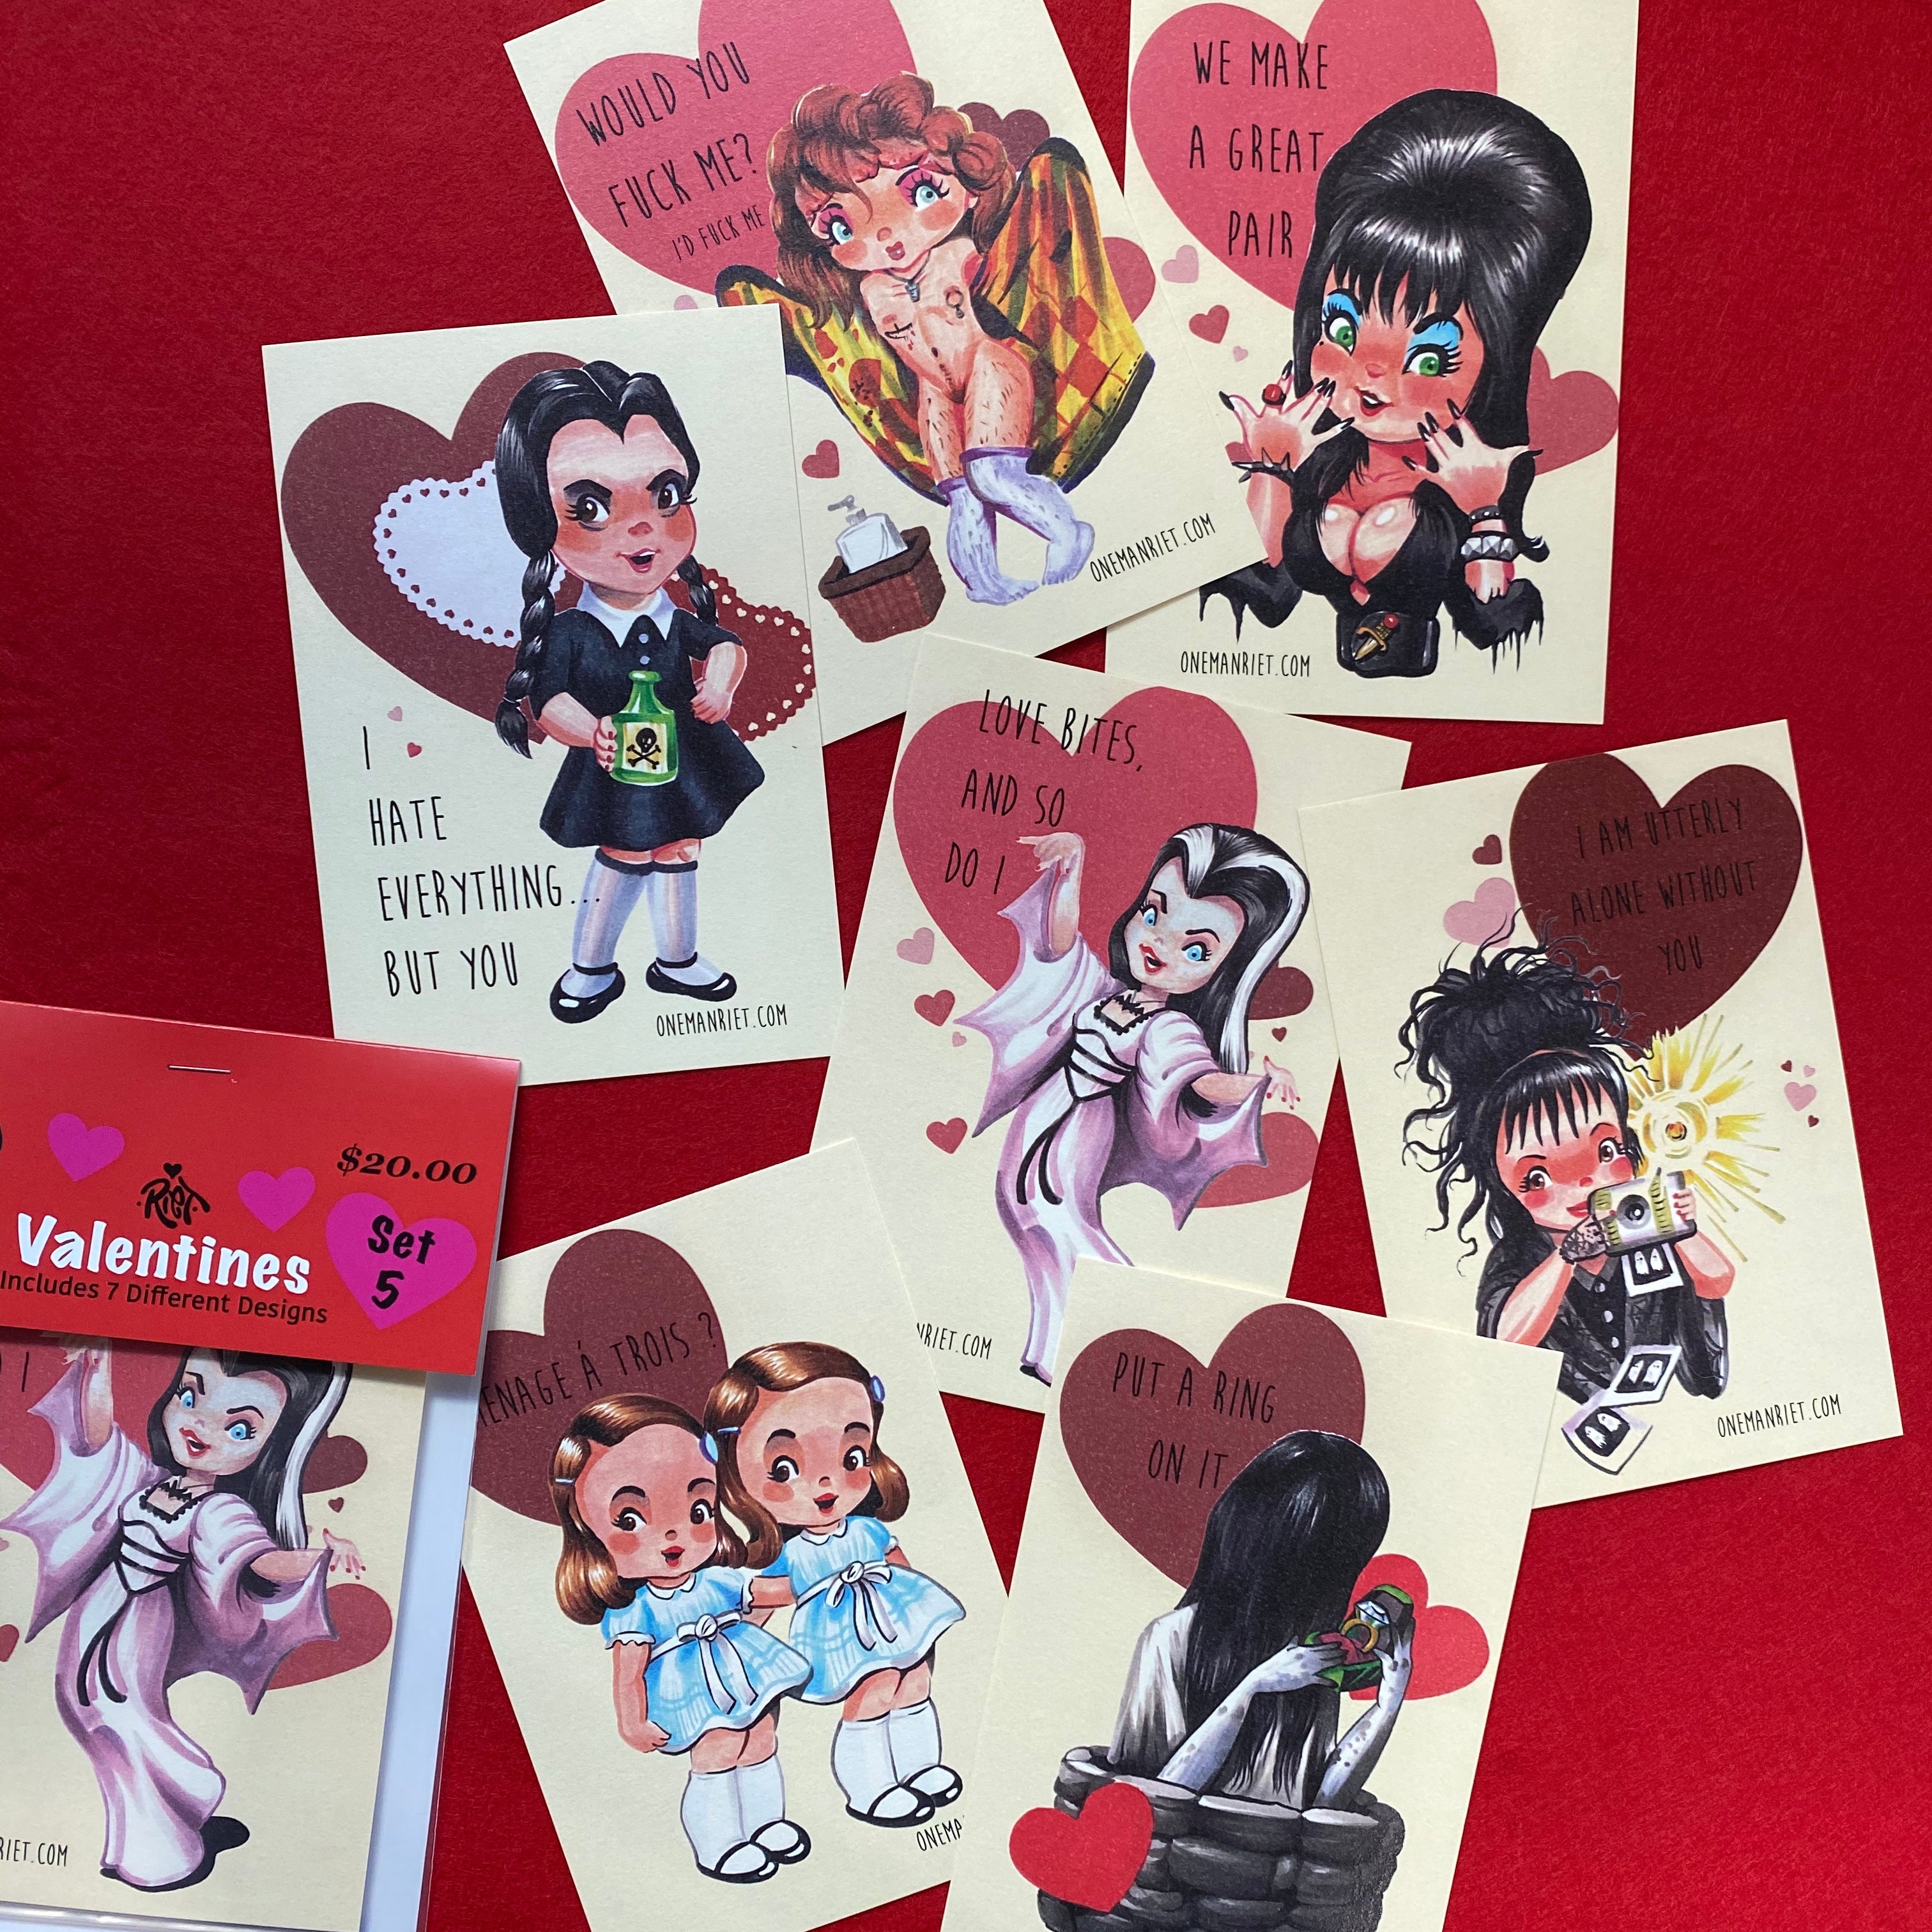 Set 5: Female Horror Valentine Cards